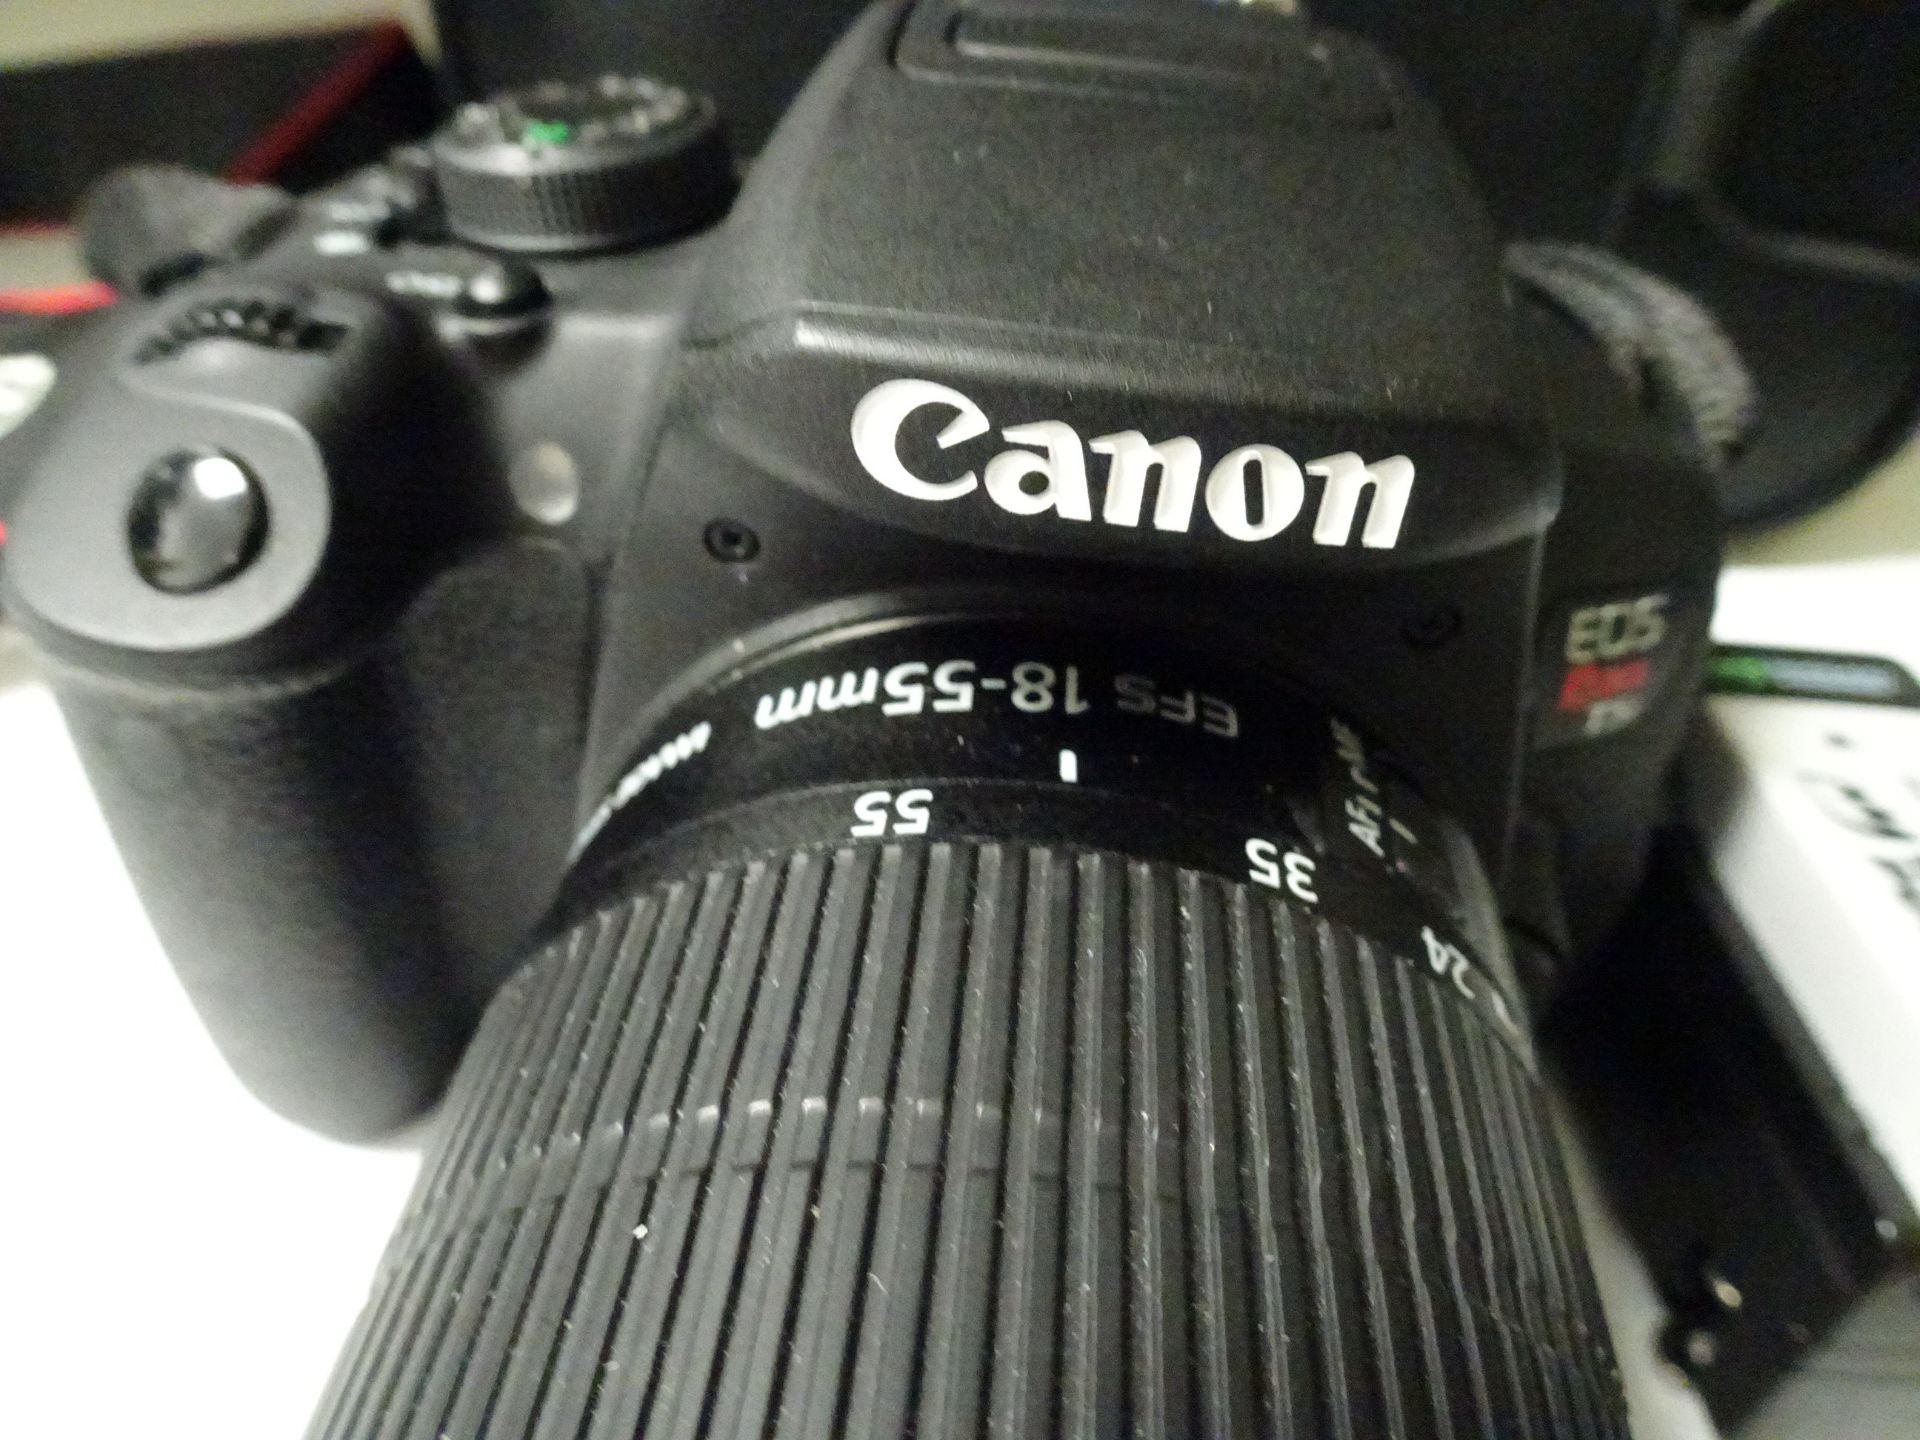 Canon EOS Rebel T5i DSLR sn 302075003371 w/ Canon EF-S 18-55mm 1:3.5-5.6 IS STM /58mm Lens, (2) - Image 12 of 15